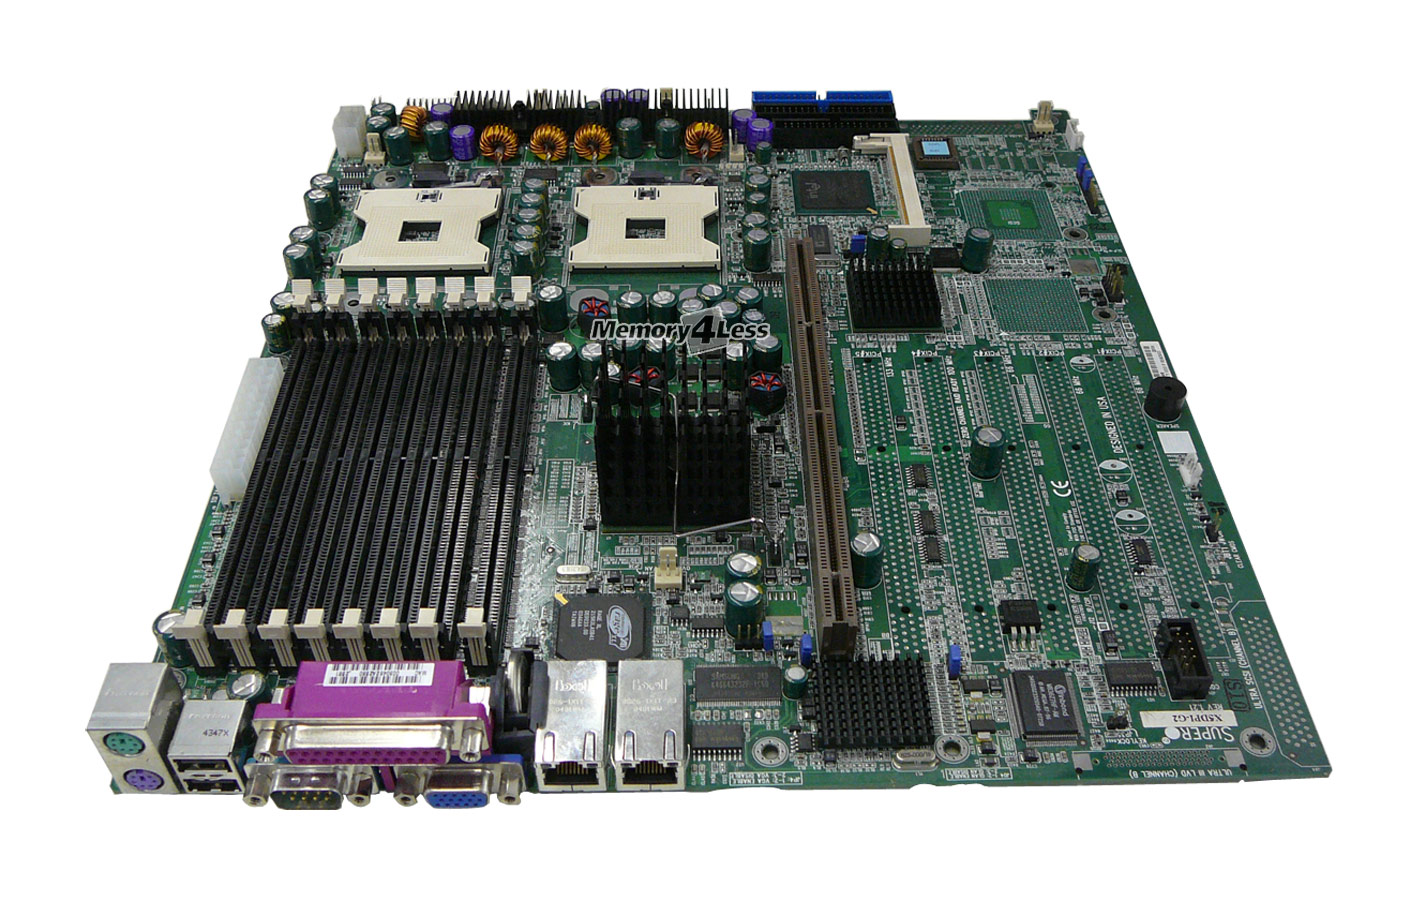 X5DPI-G2-B SuperMicro X5DPI-G2 Dual Socket mPGA604 Intel E7501 Chipset Intel Xeon Processors Support DDR 8x DIMM Extended-ATX Server Motherboard (Refurbished)